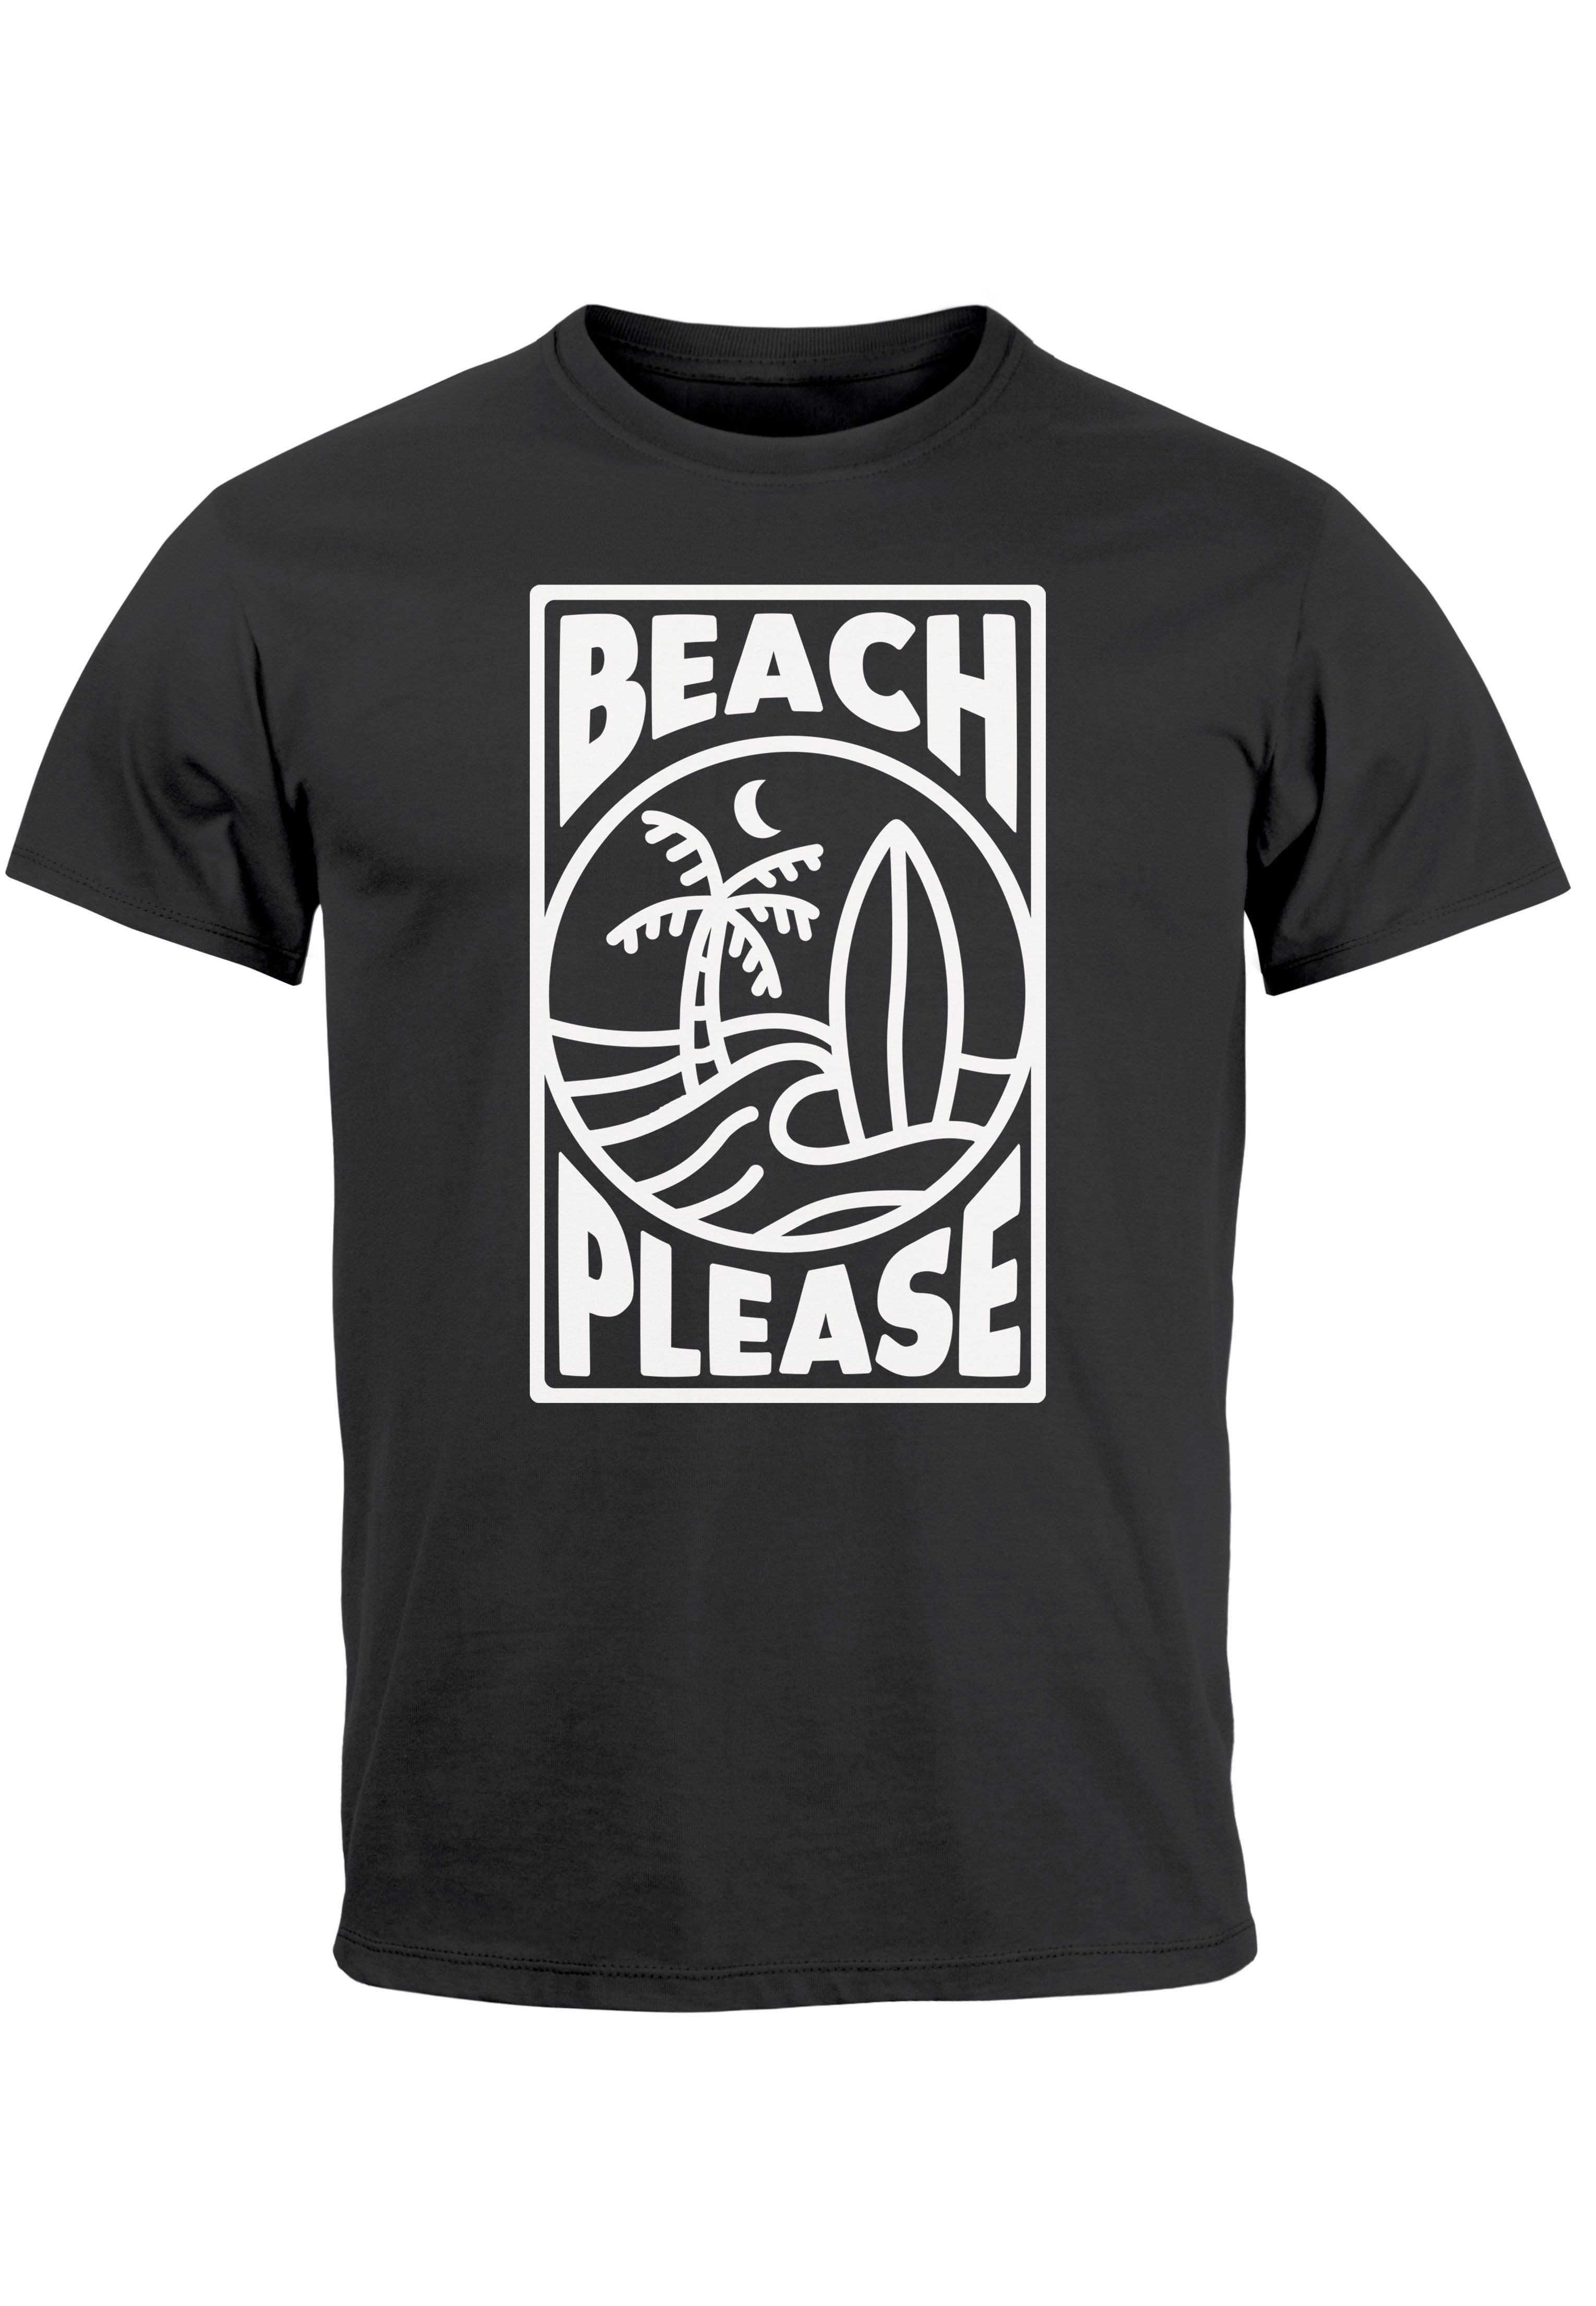 Sommer Herren Surfboard T-Shirt Print-Shirt Wave Welle dunkelgrau Please Surfing Print mit Beach Print Neverless